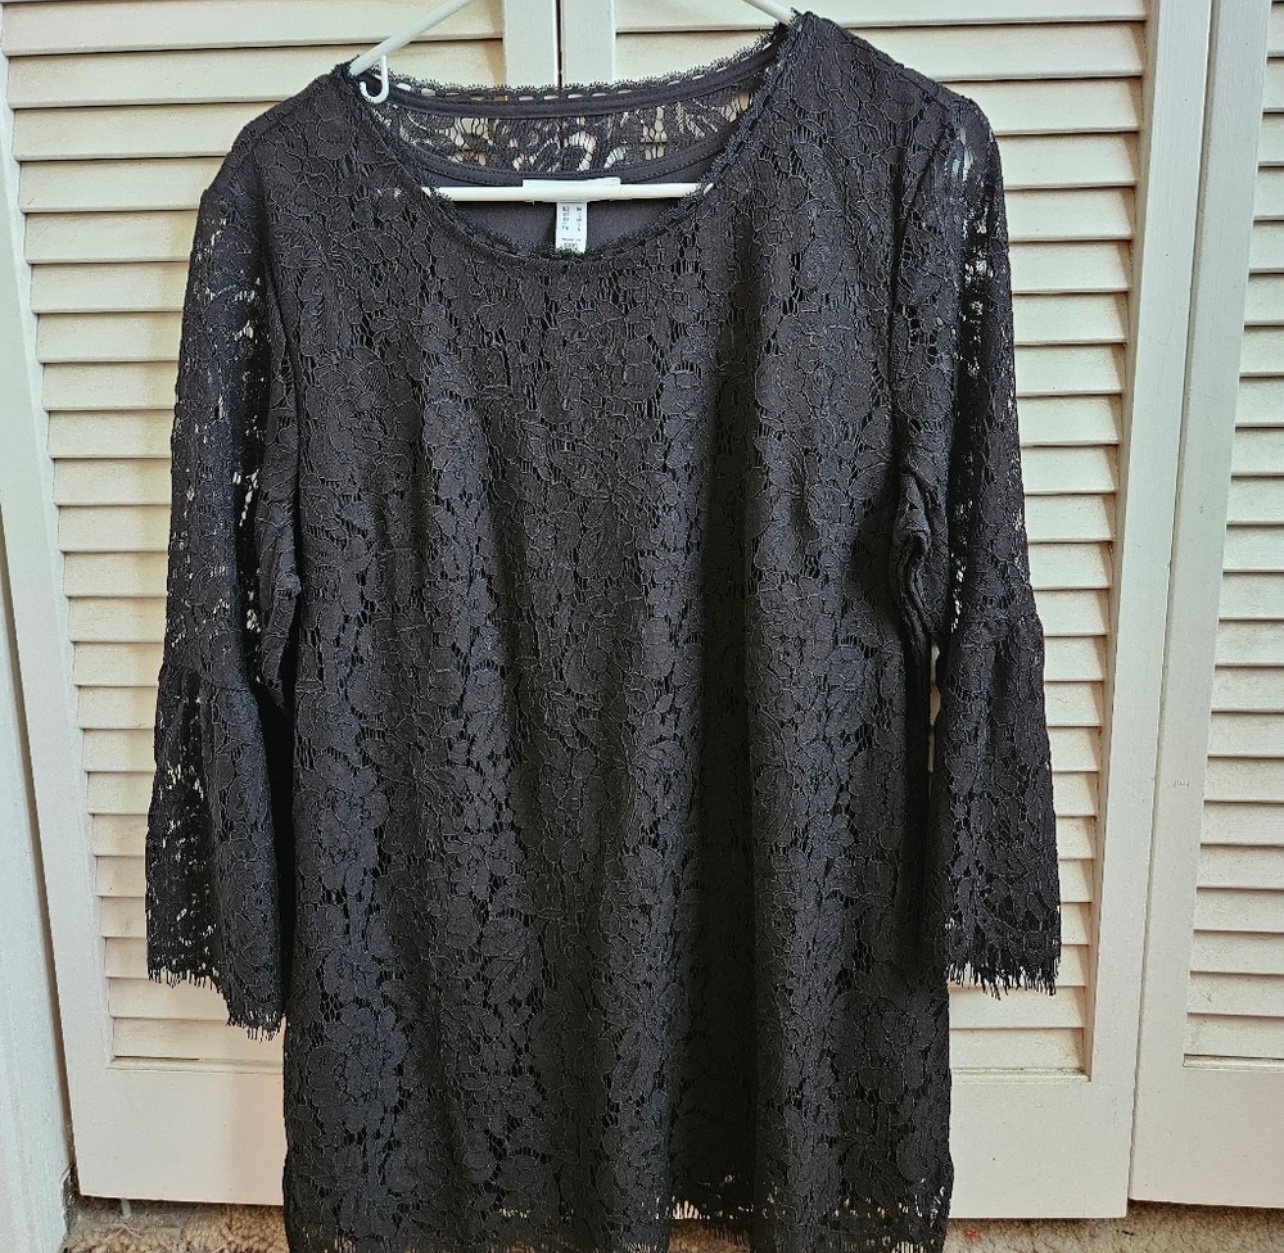 Latest  Isaac Mizrahi black lace blouse KVXHw0gev US Sa